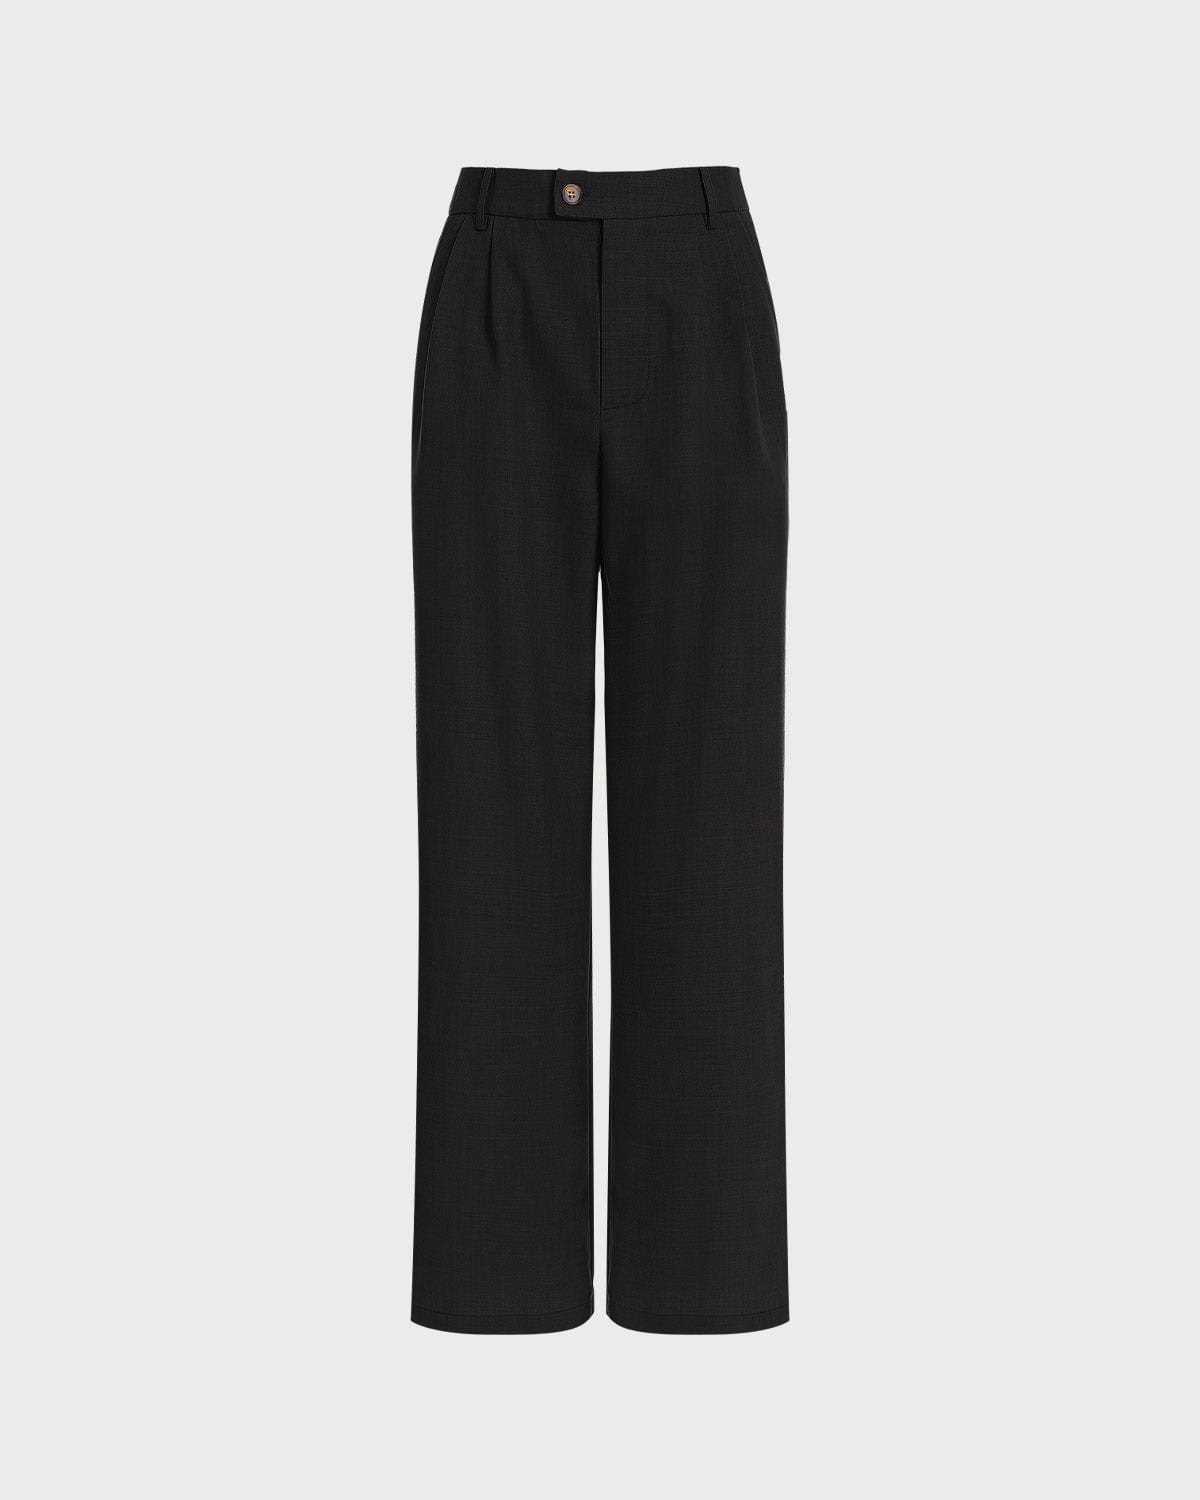 High Waisted Black Pants, Shop 11 items